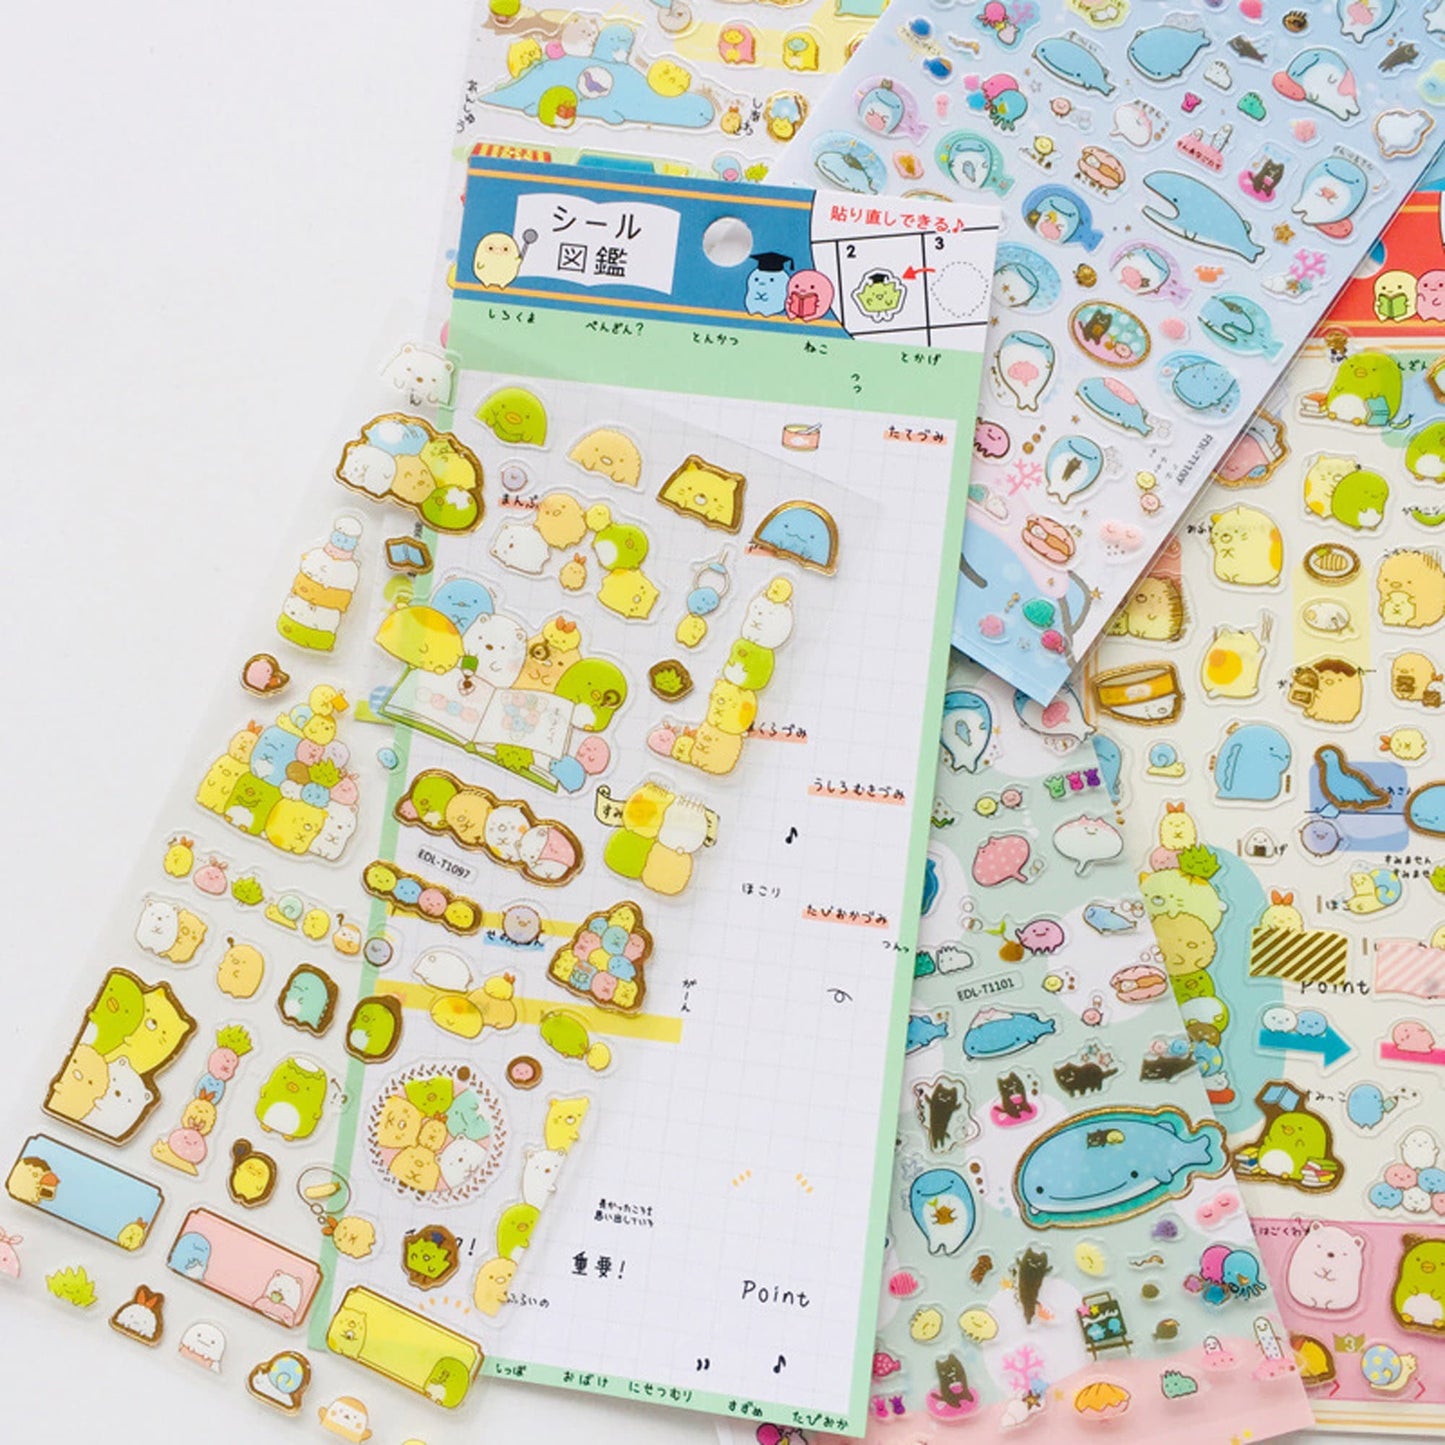 Kawaii Planner Stickers, Cute Animals, Cute Animal Friends, Kawaii Stickers, Fun With Friends - Clear Sticker Sheets, Animal Stationary b1SH